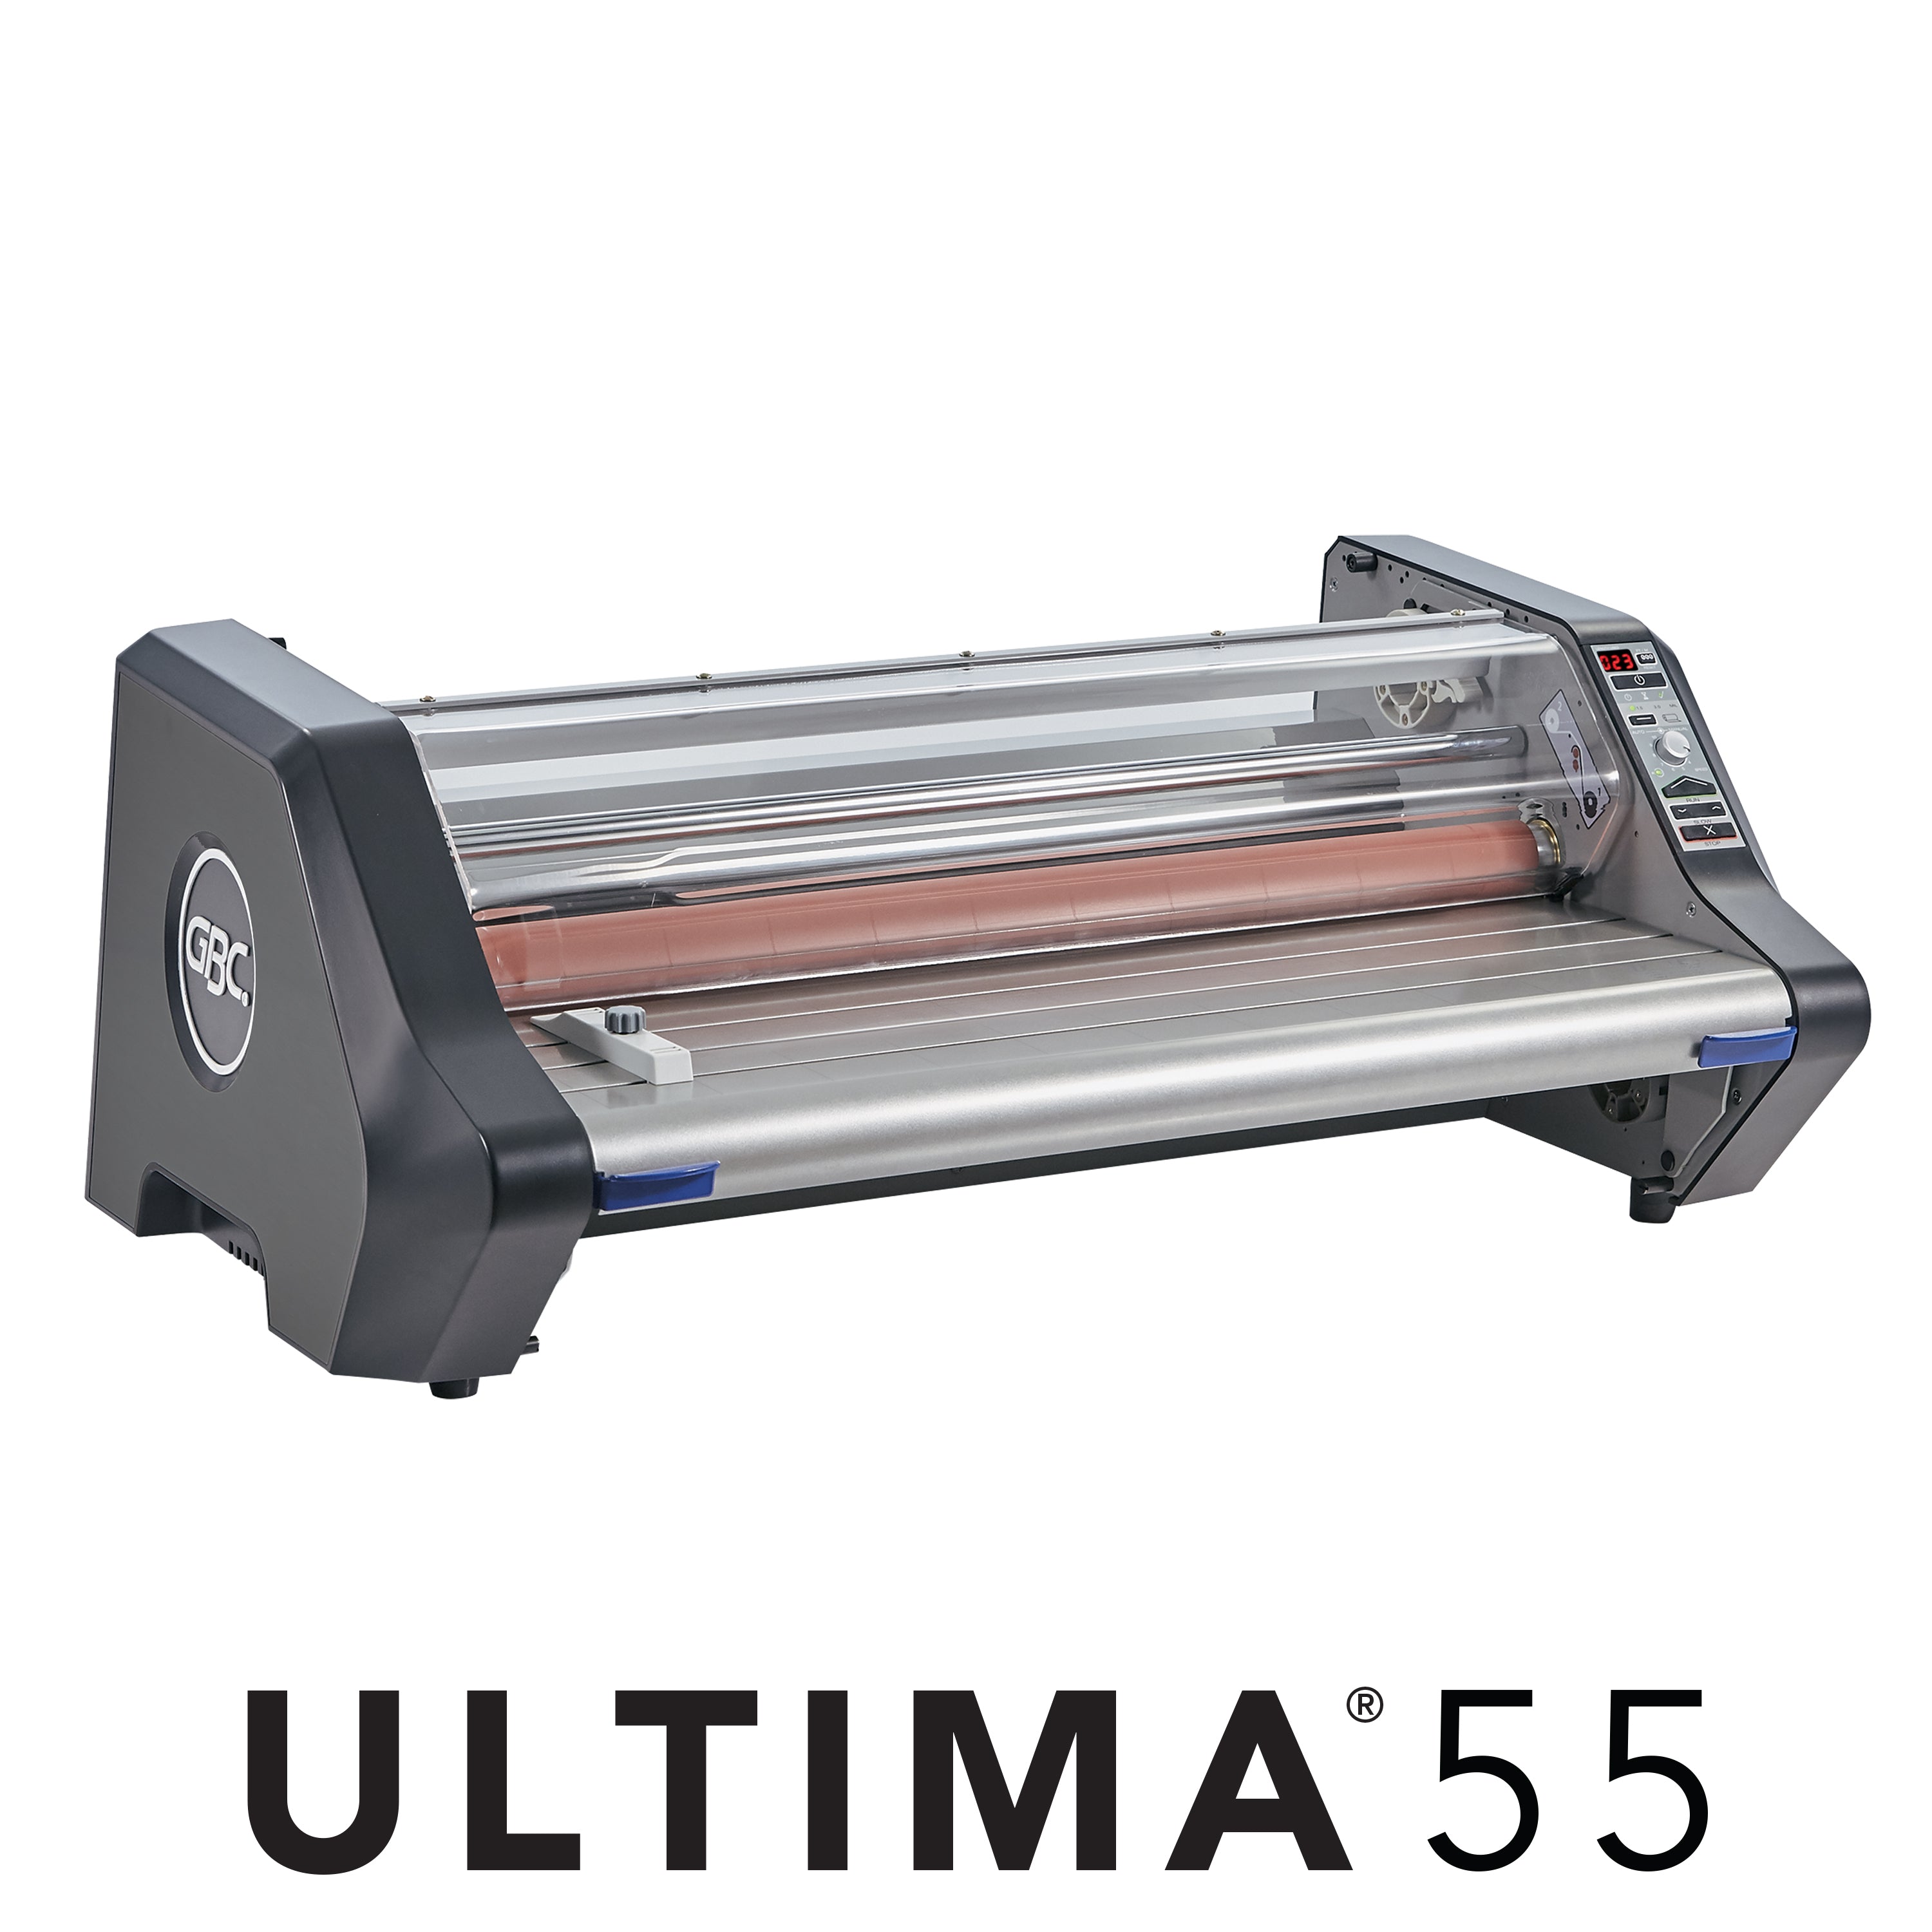 GBC Ultima 55 EZ Load Thermal Roll Laminator